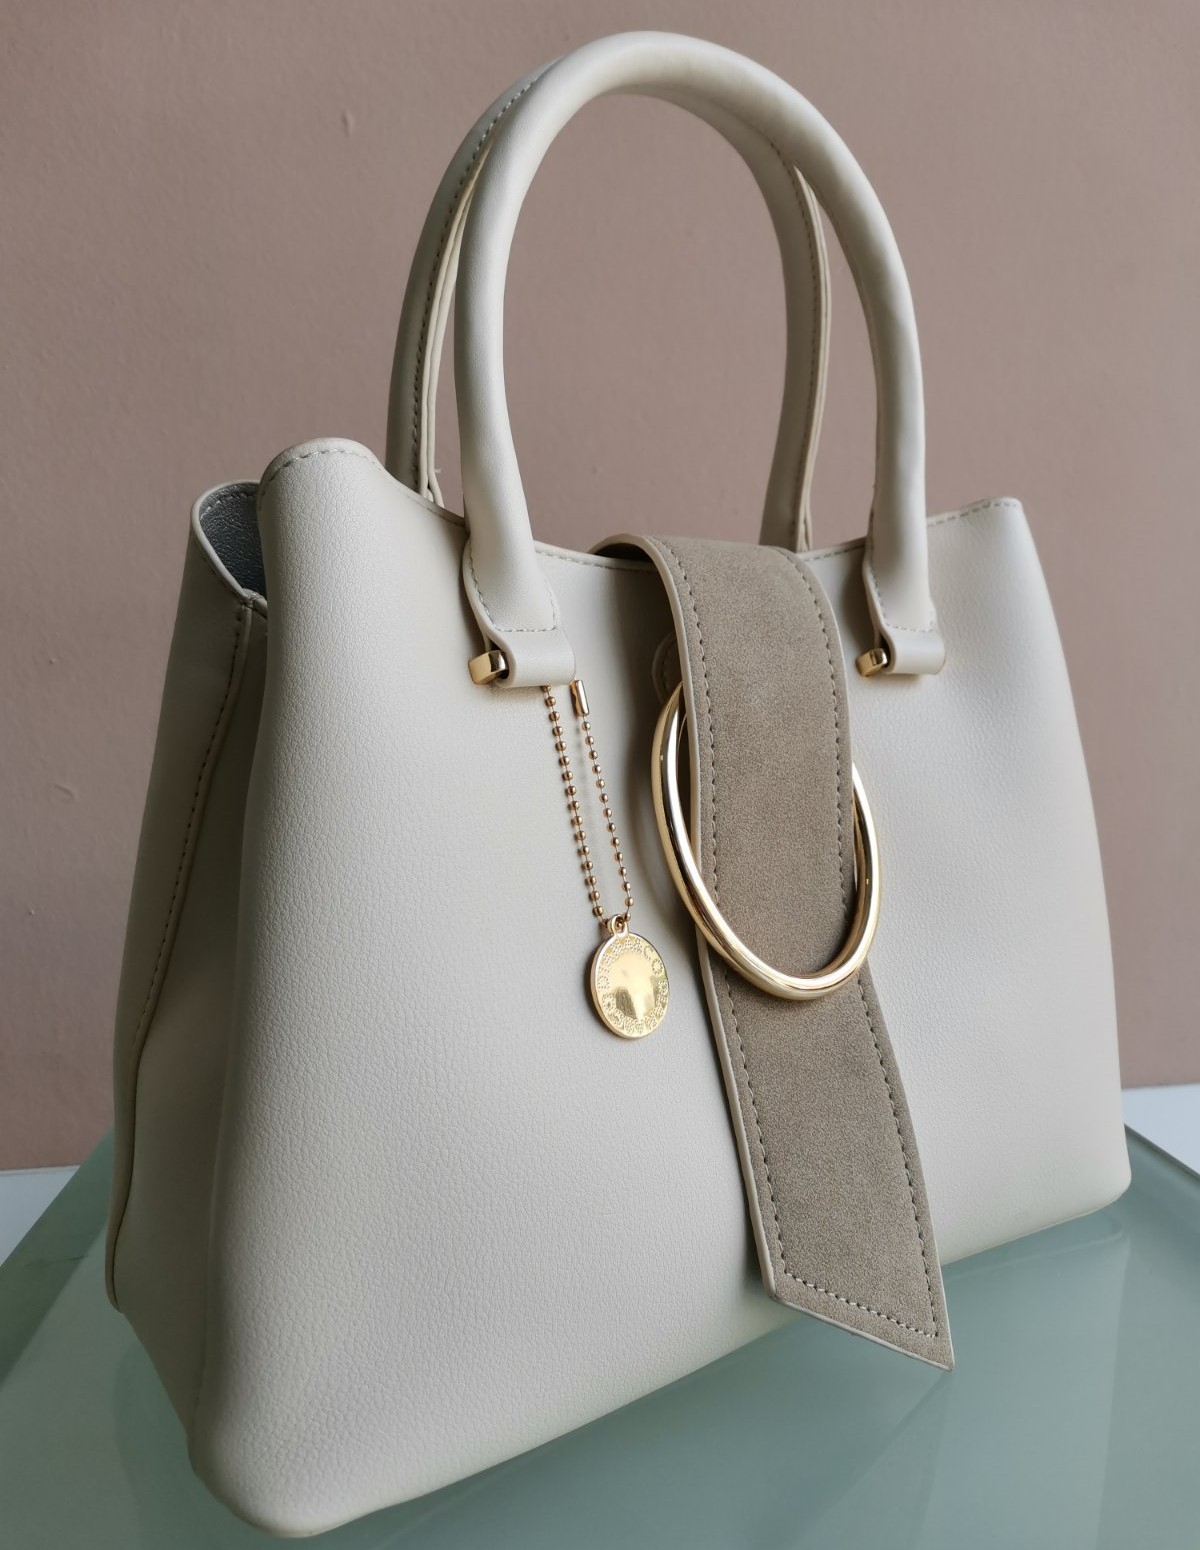 Handbag with Strap in beige